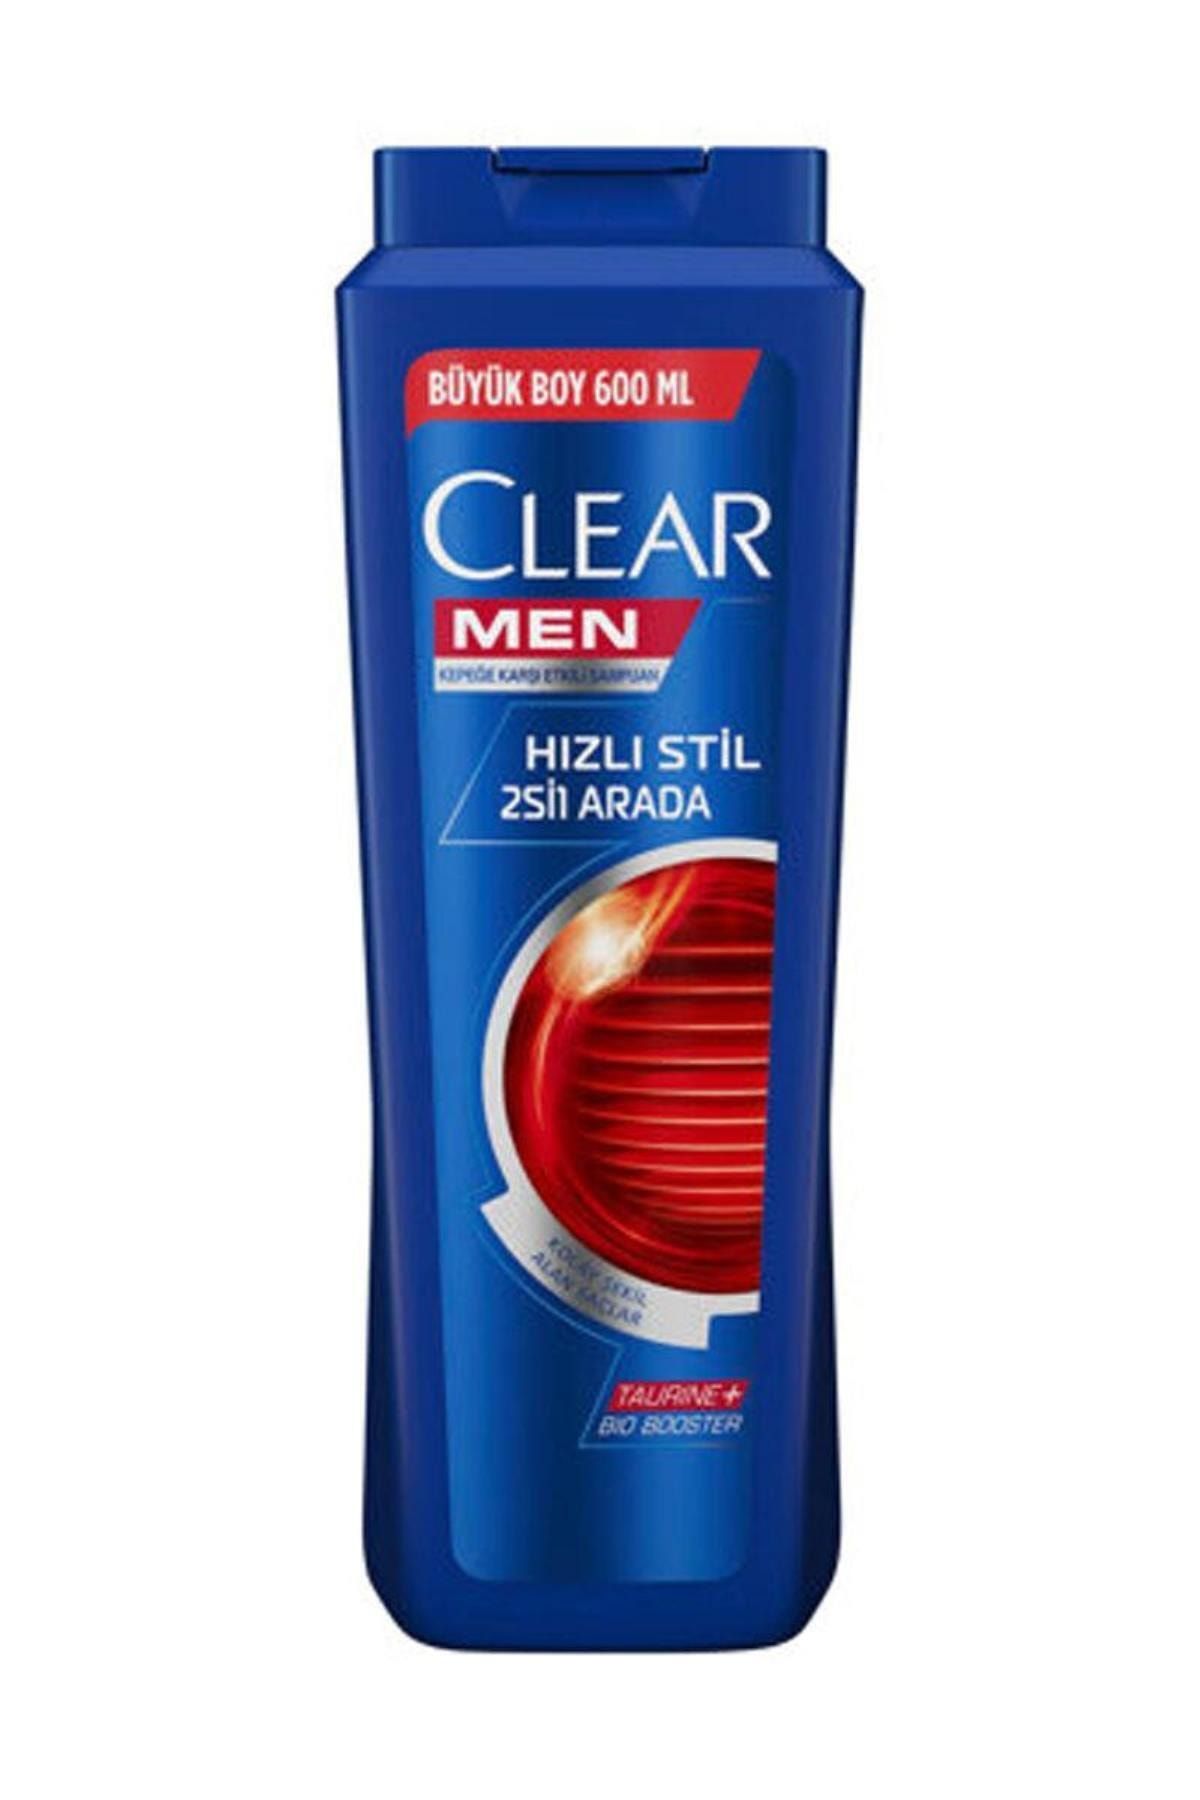 Clean & Clear Clear Men Hızlı Stil 2si1 Arada Şampuan 600ml